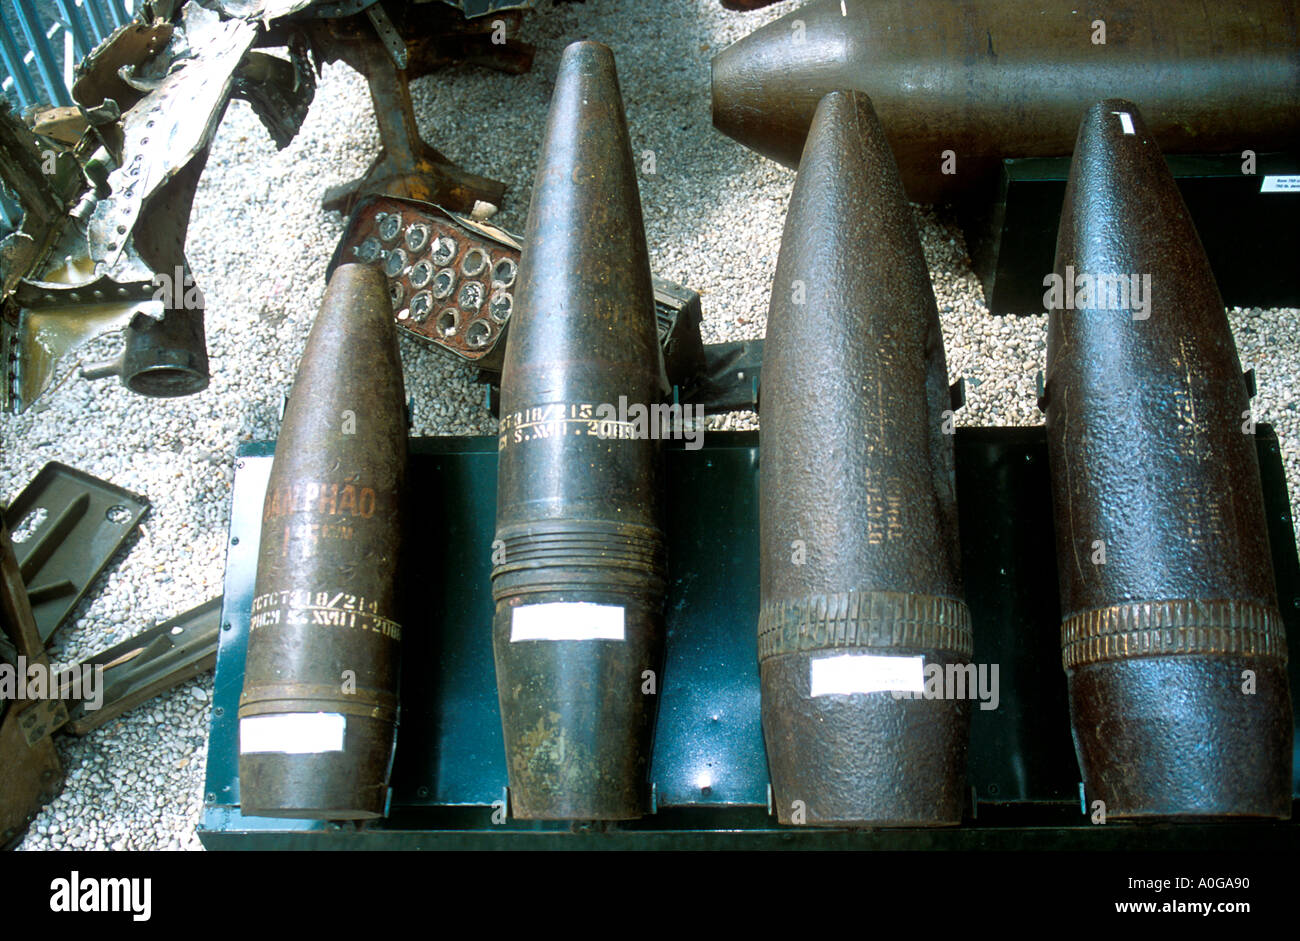 Artillery shells and war debris at the War Crimes Museum in Ho Chi Minh City Vietnam Stock Photo